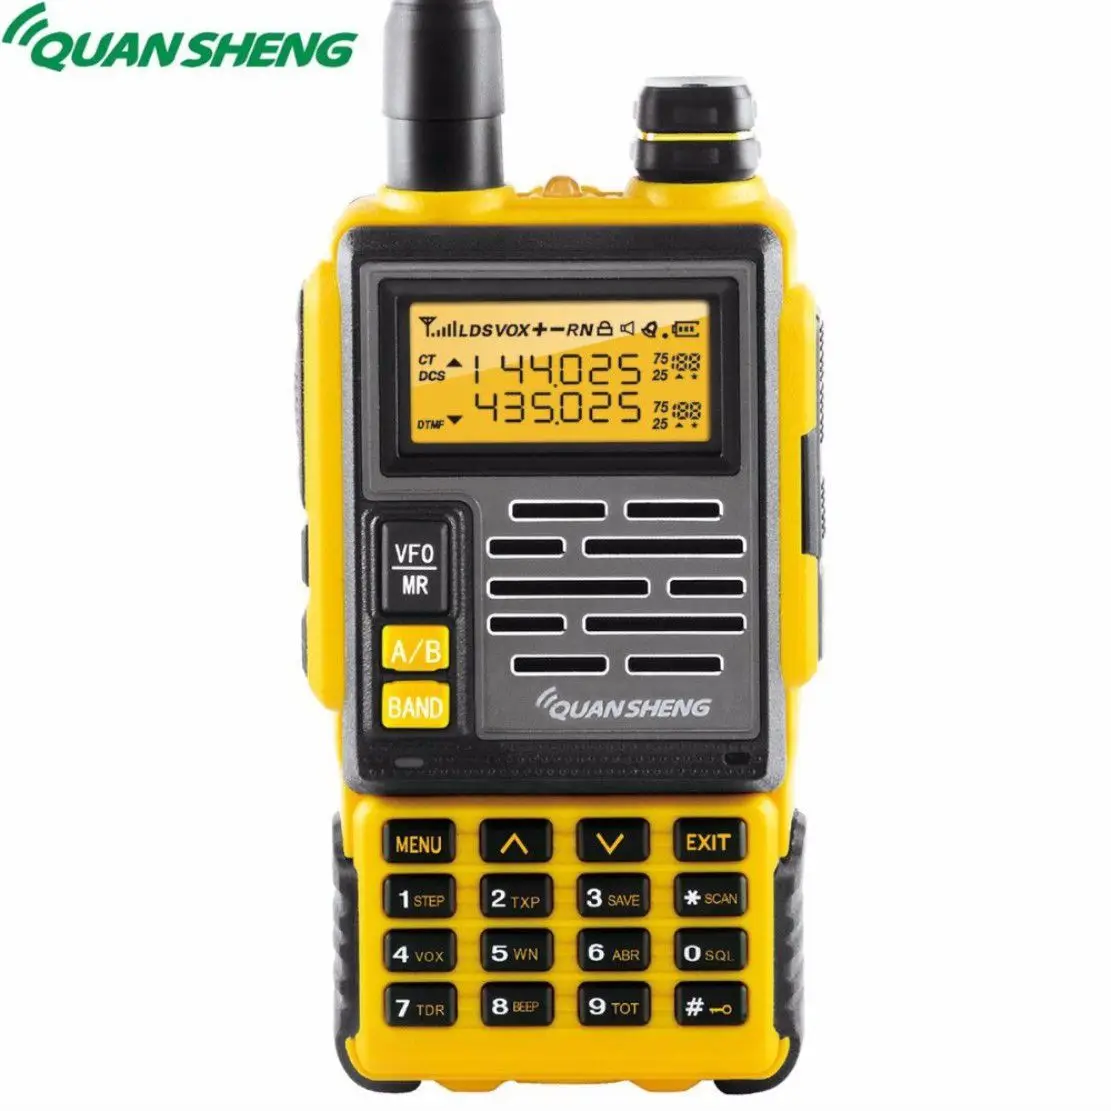 

Quansheng TG 007 Walkie Talkie Dual Band UHF VHF DTMF FM Communicator 10KM Long Range Transceiver Portable Ham CB Two Way Radio